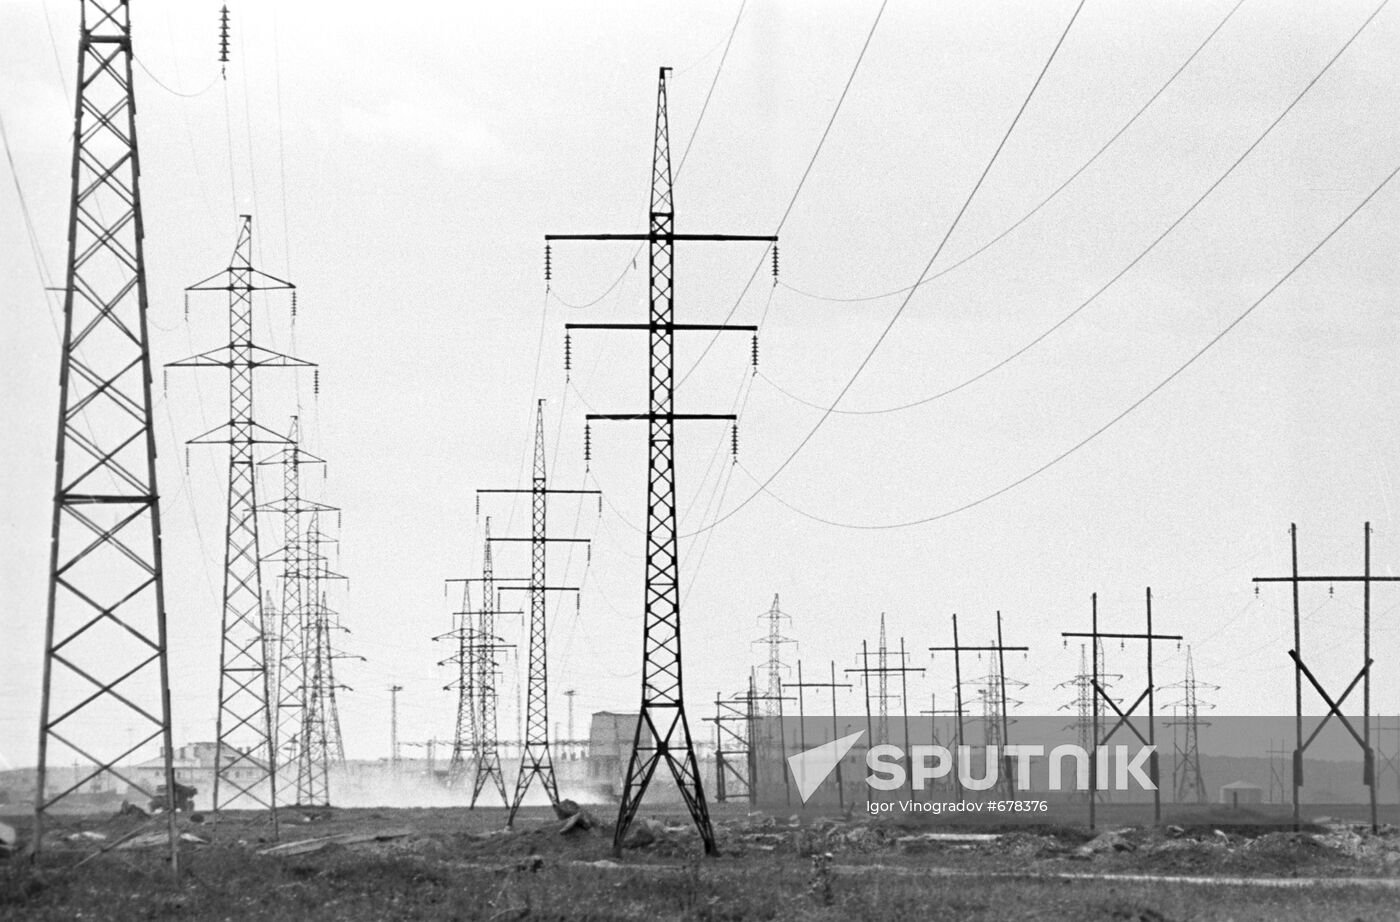 Power transmission line